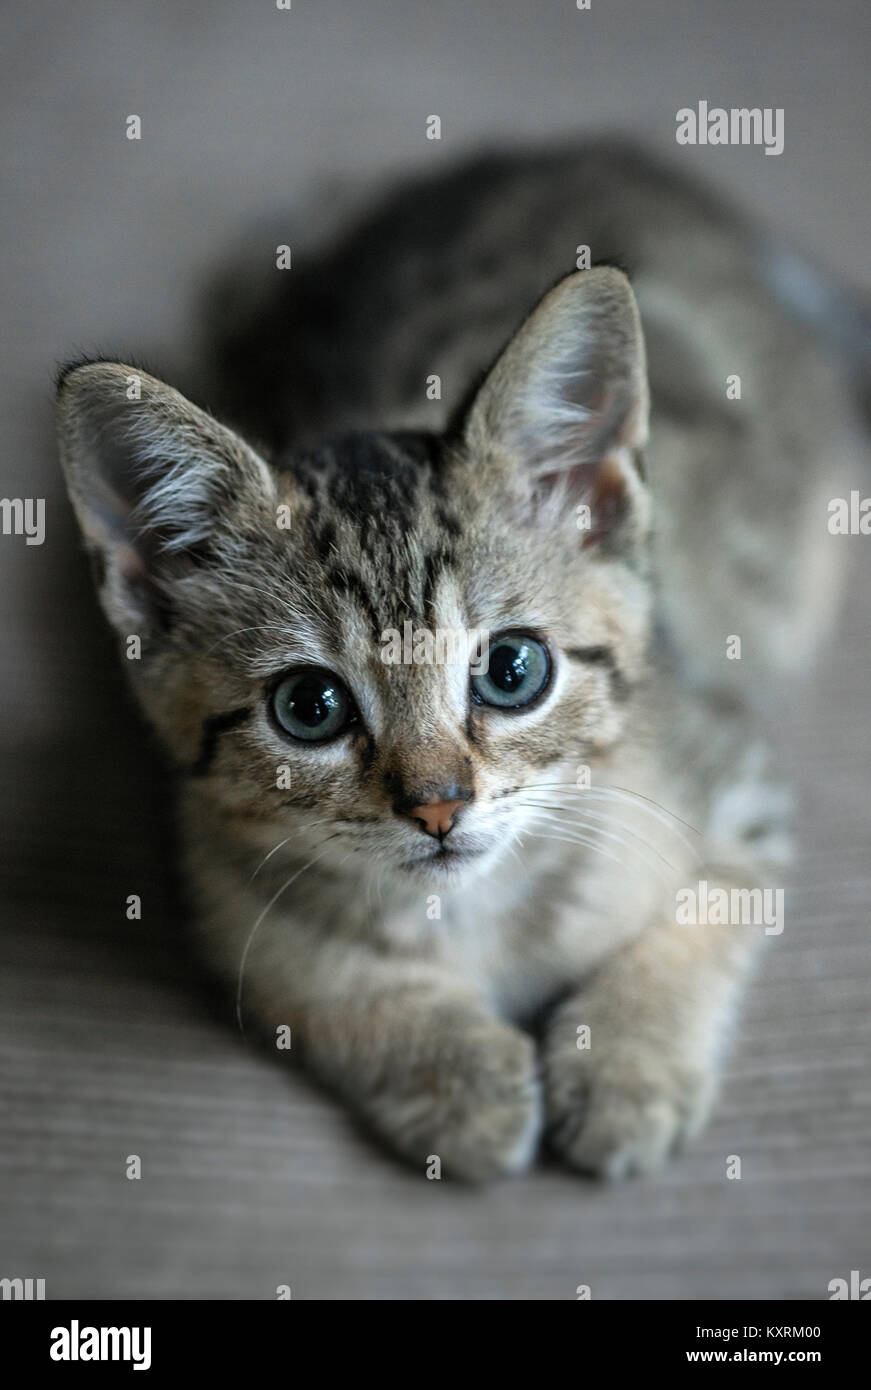 Adorabili tabby kitten portrait. Foto Stock